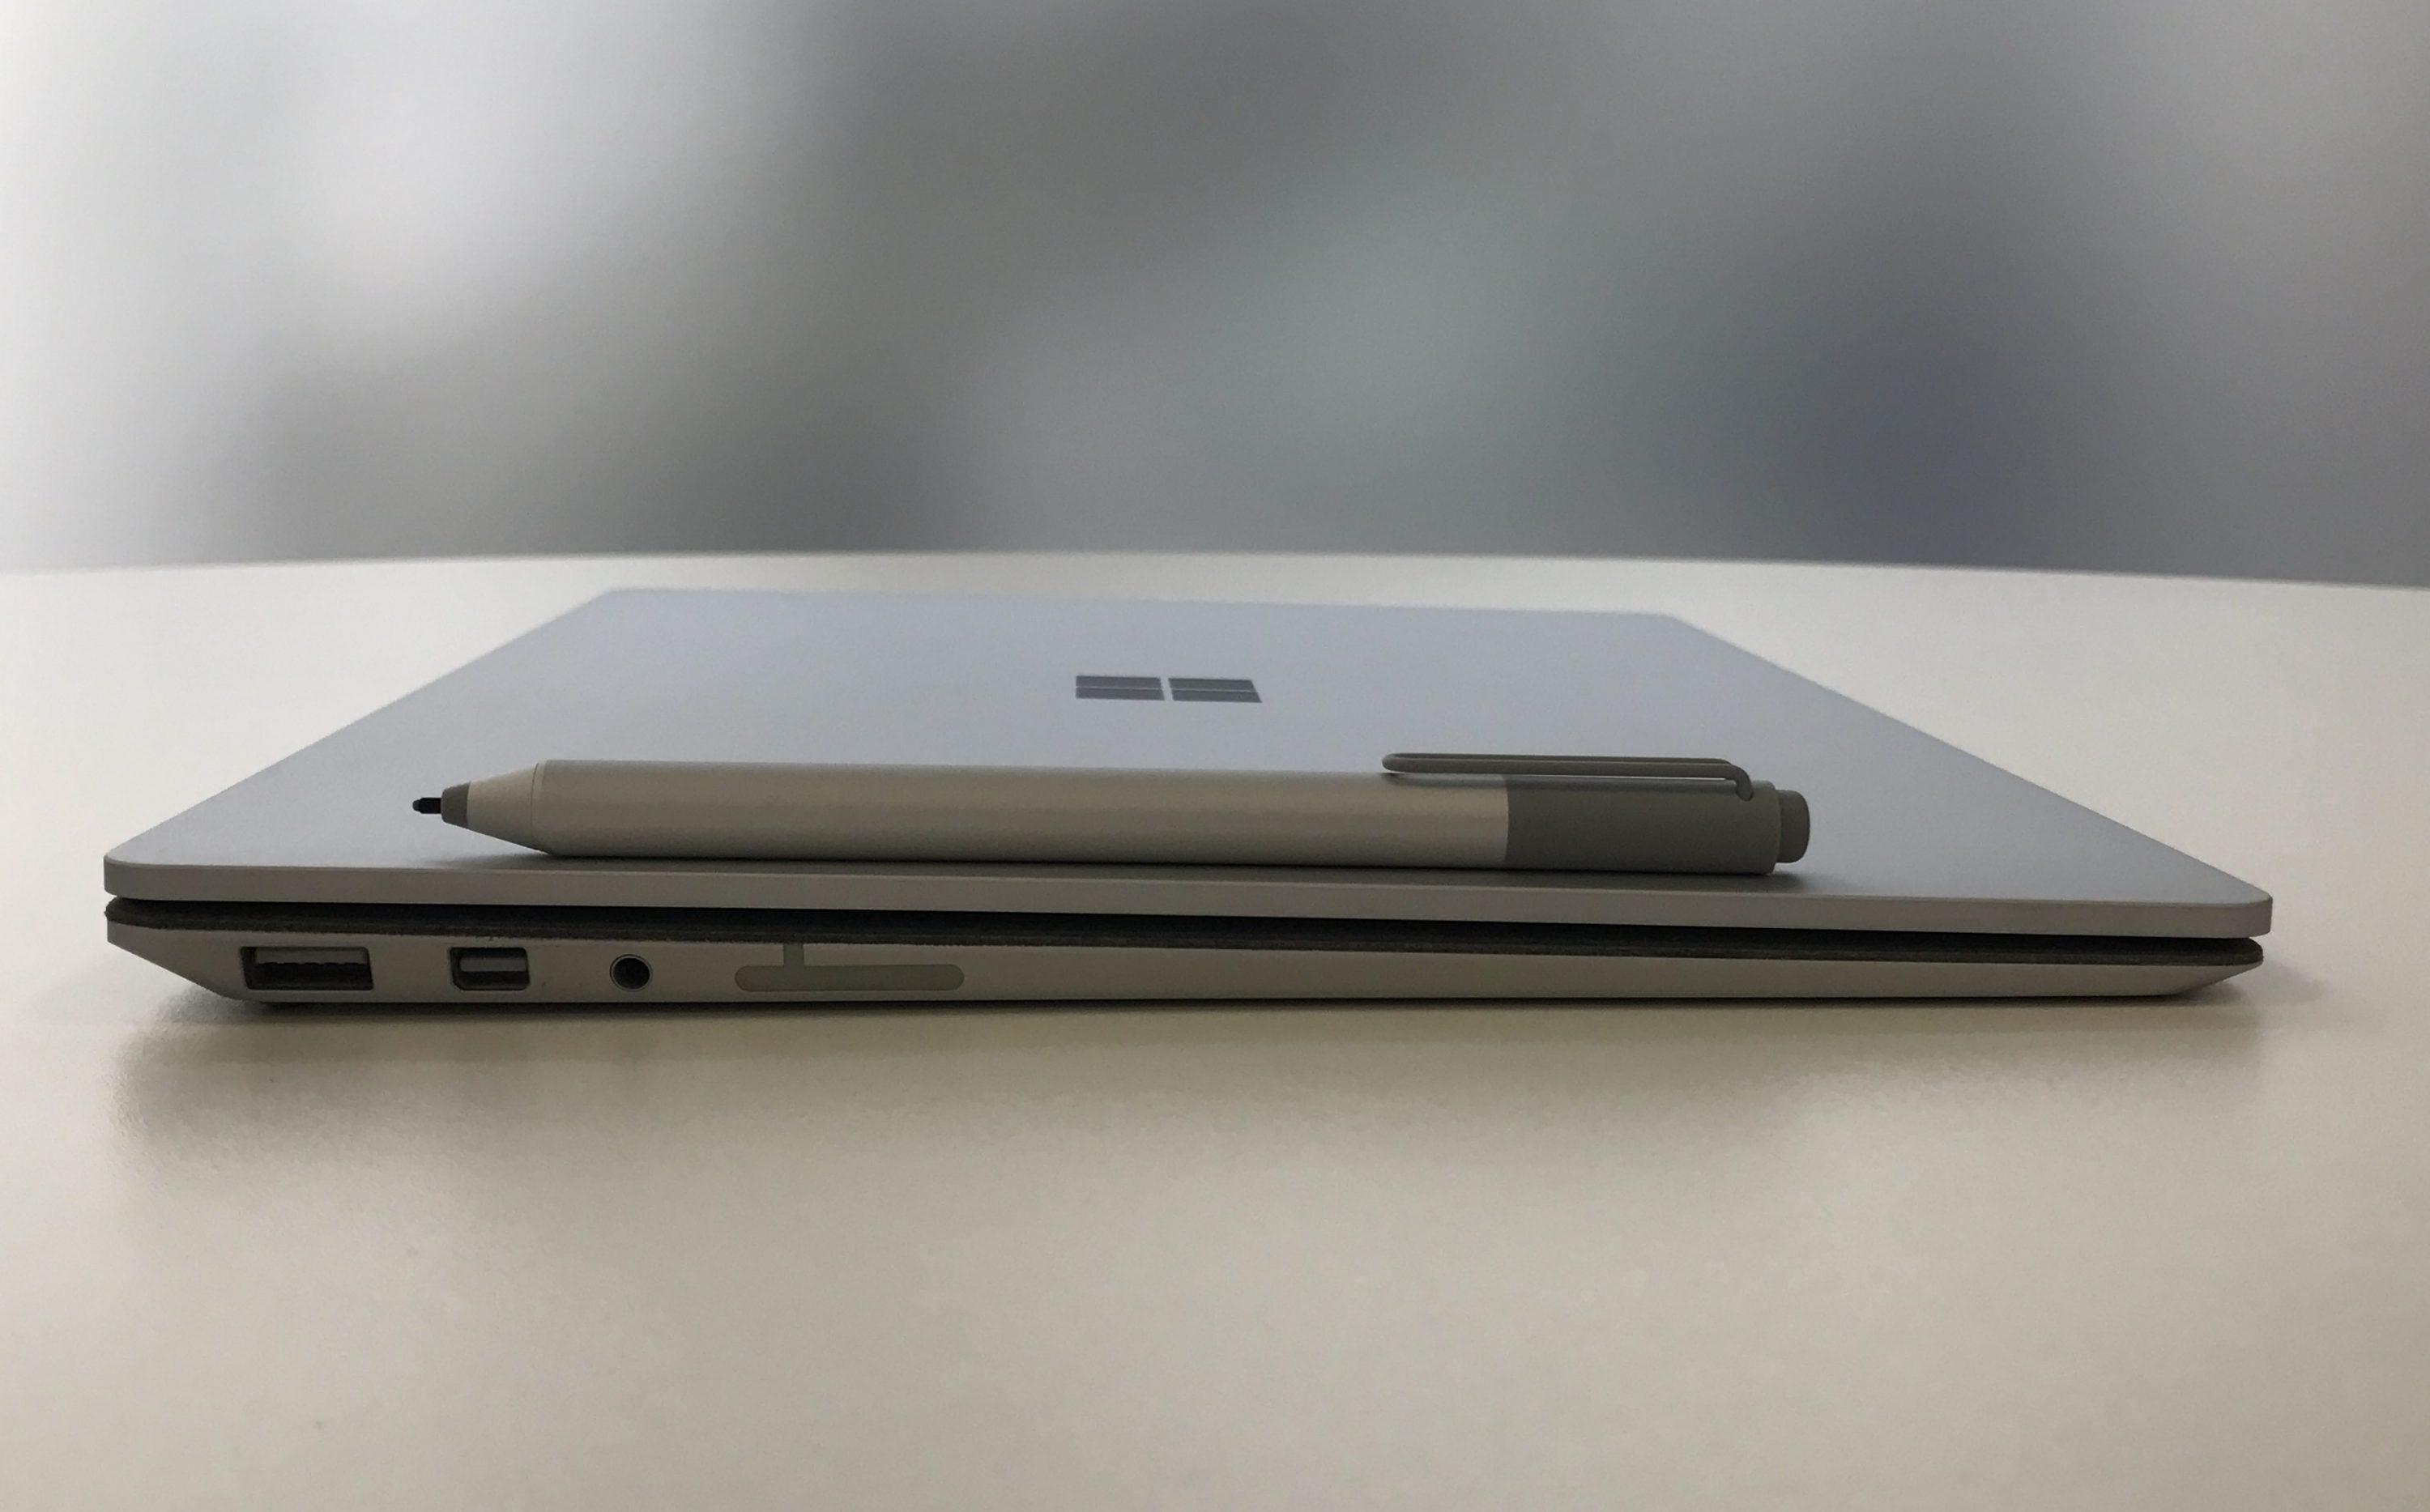 نقد و بررسی سرفیس لپ تاپ - Microsoft Surface Laptop